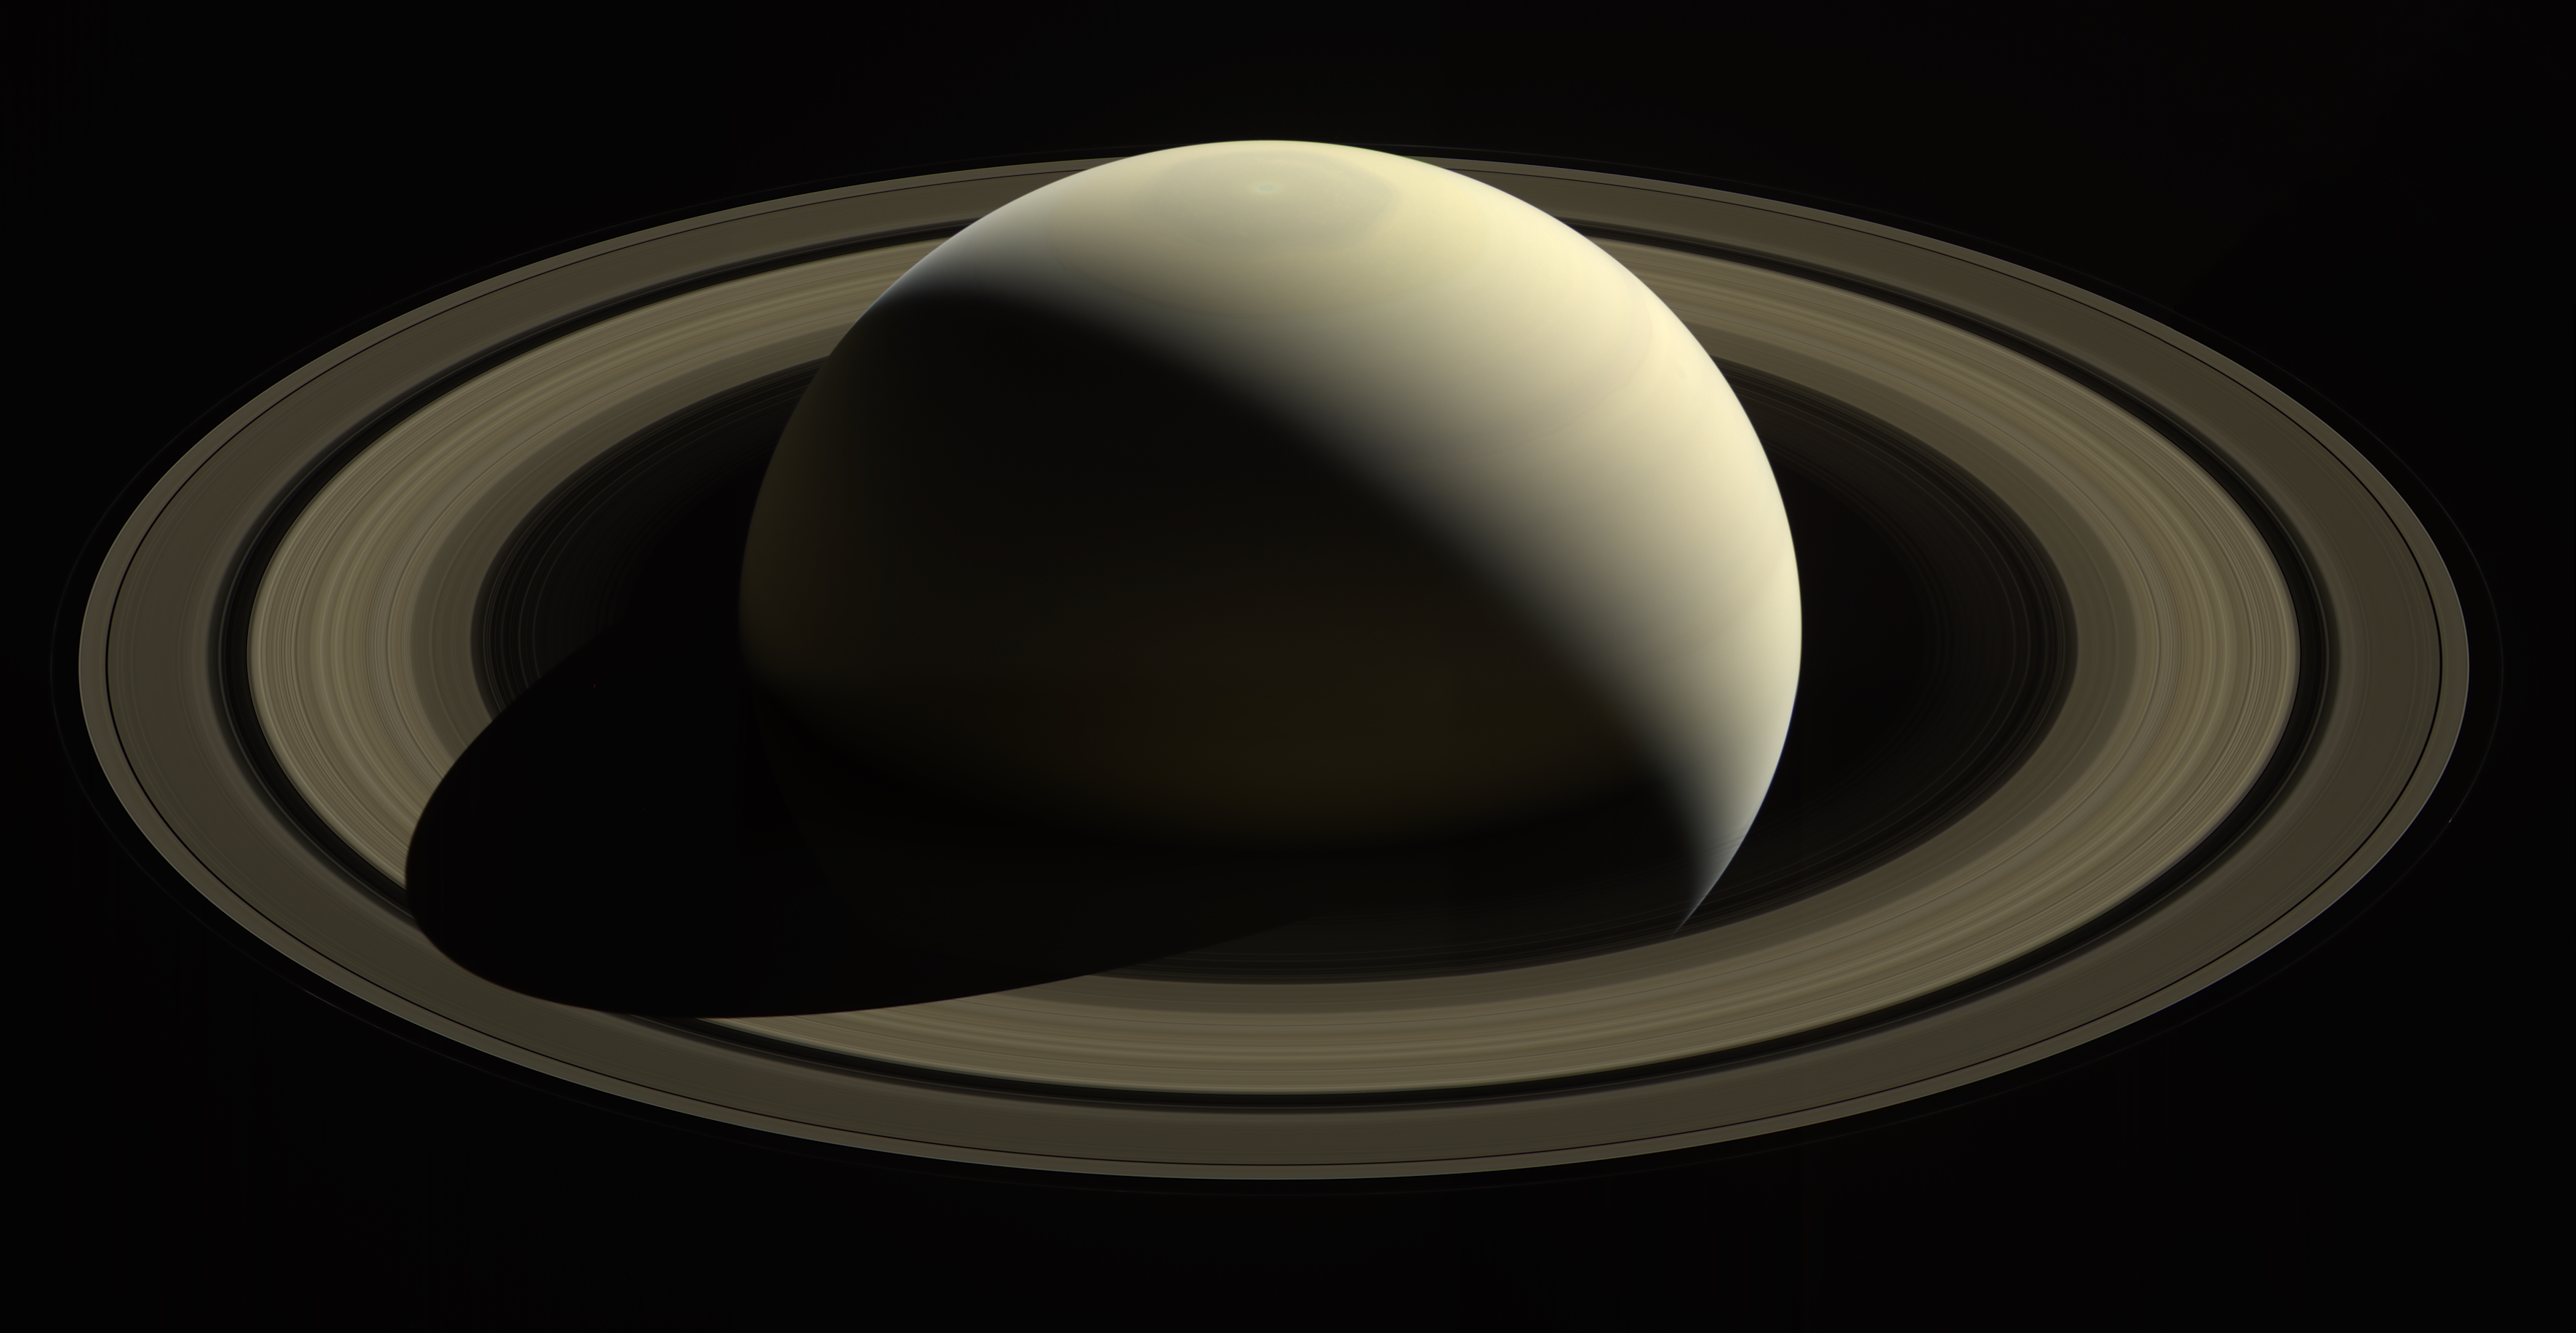 General 3545x1834 NASA Saturn planet Cassini simple background digital art